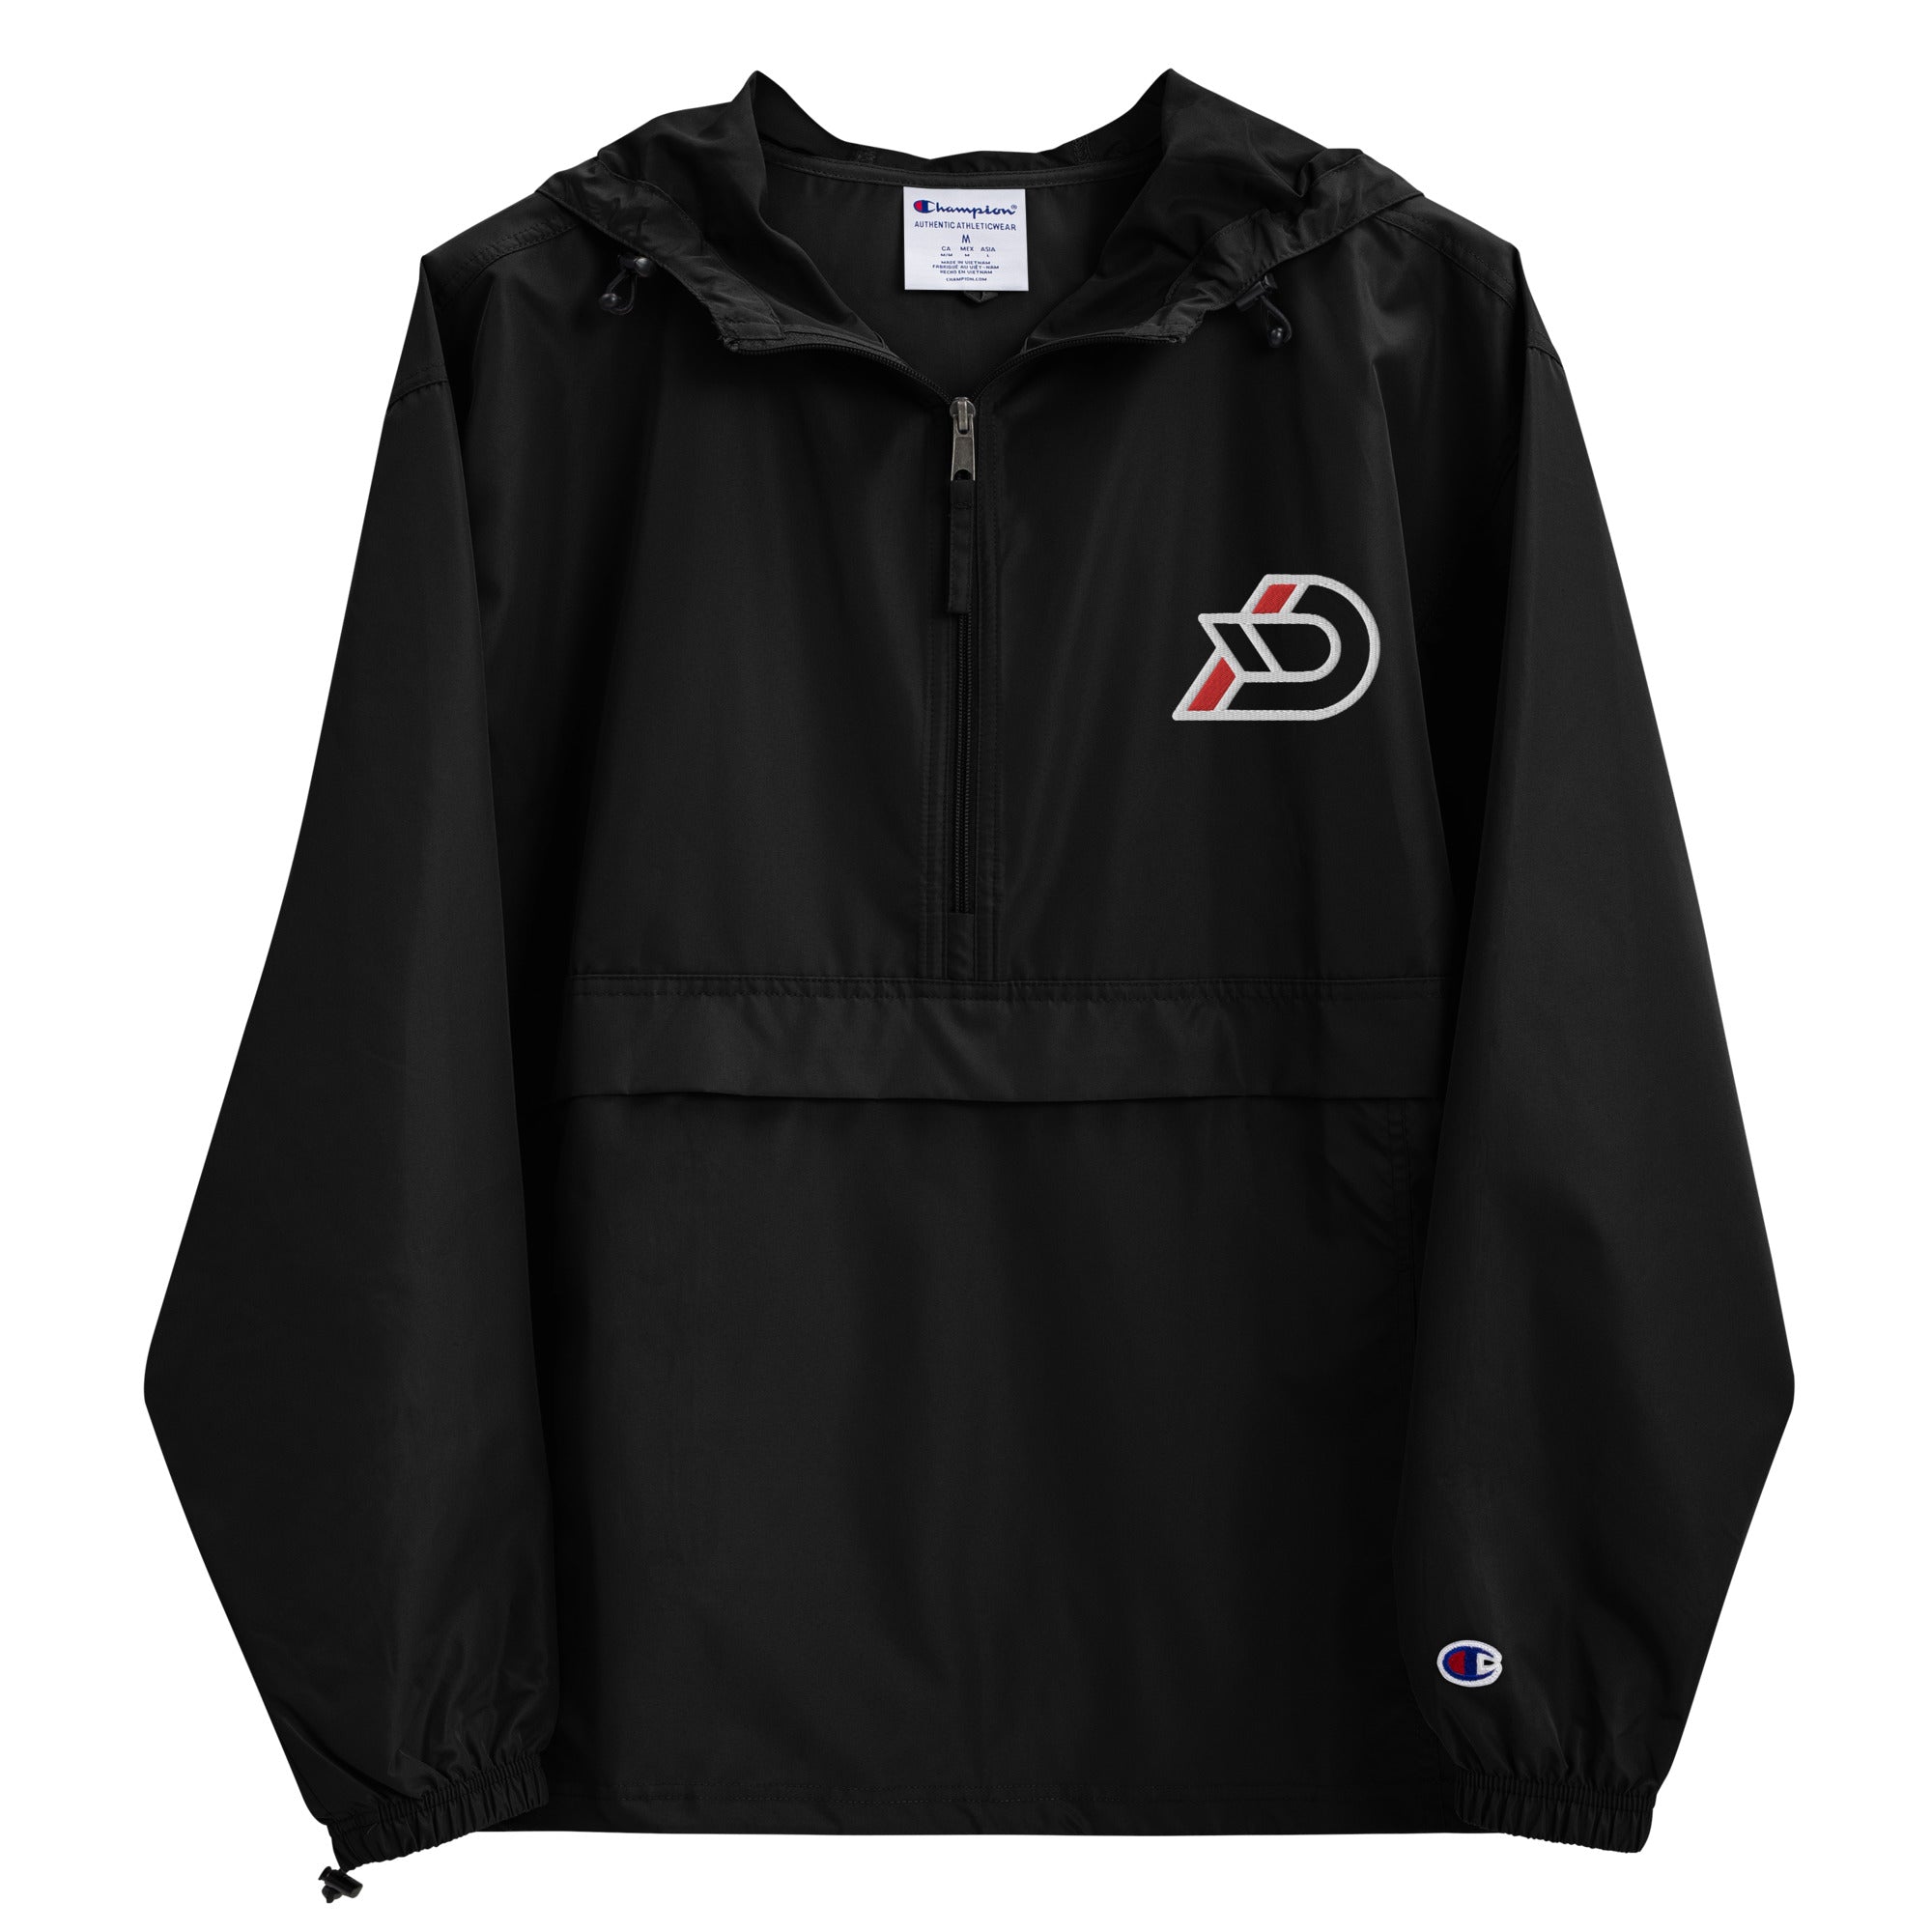 $DRIVE Racing Team -Champion Packable Jacket (Black)